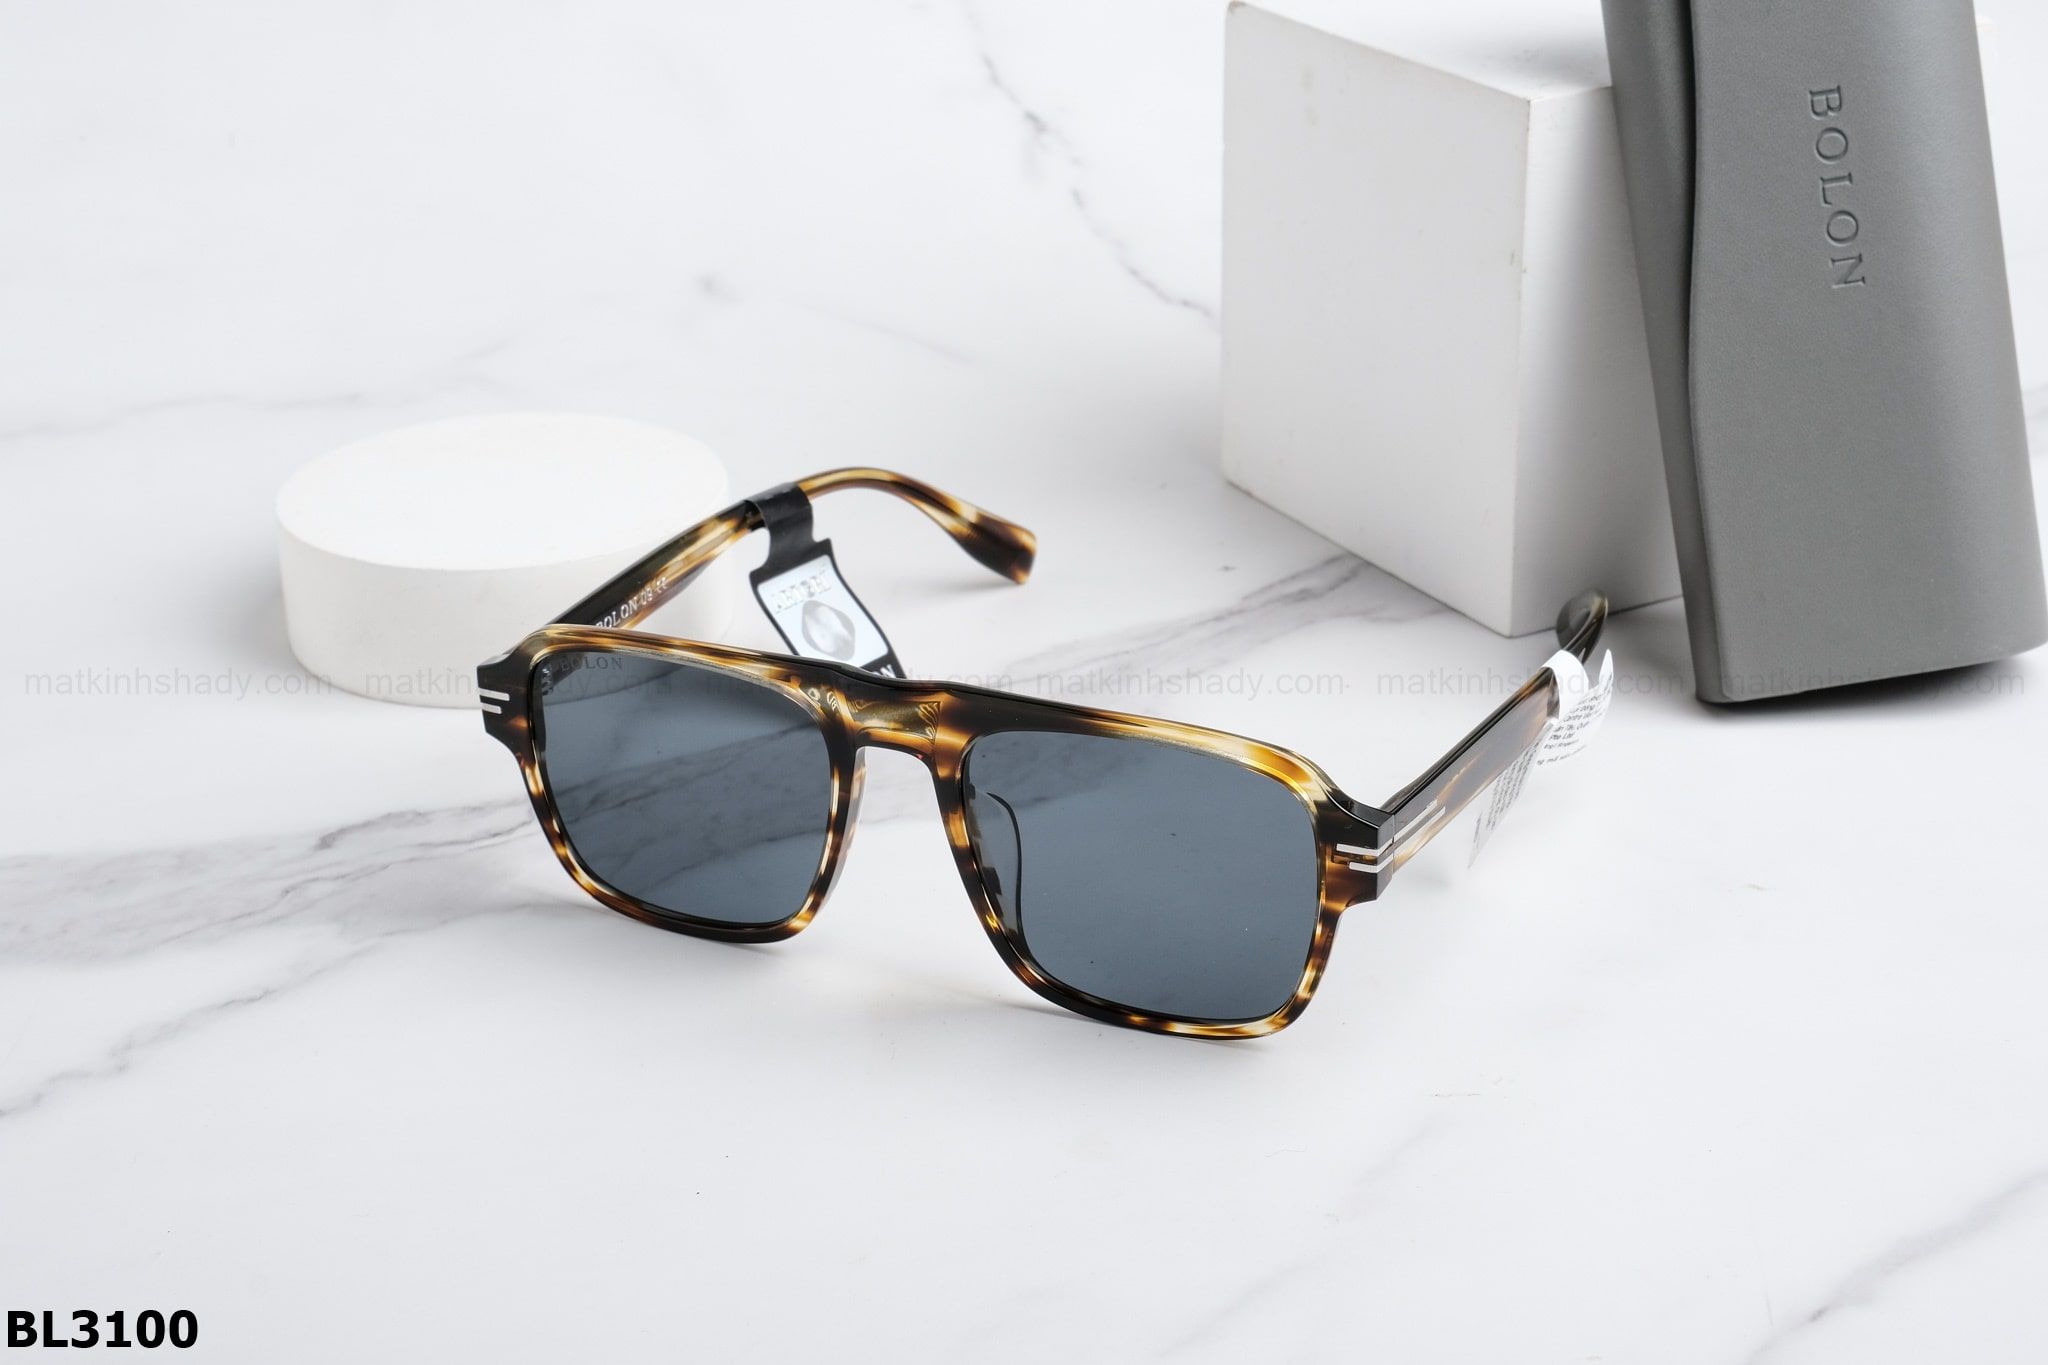  Bolon Eyewear - Sunglasses - BL3100 